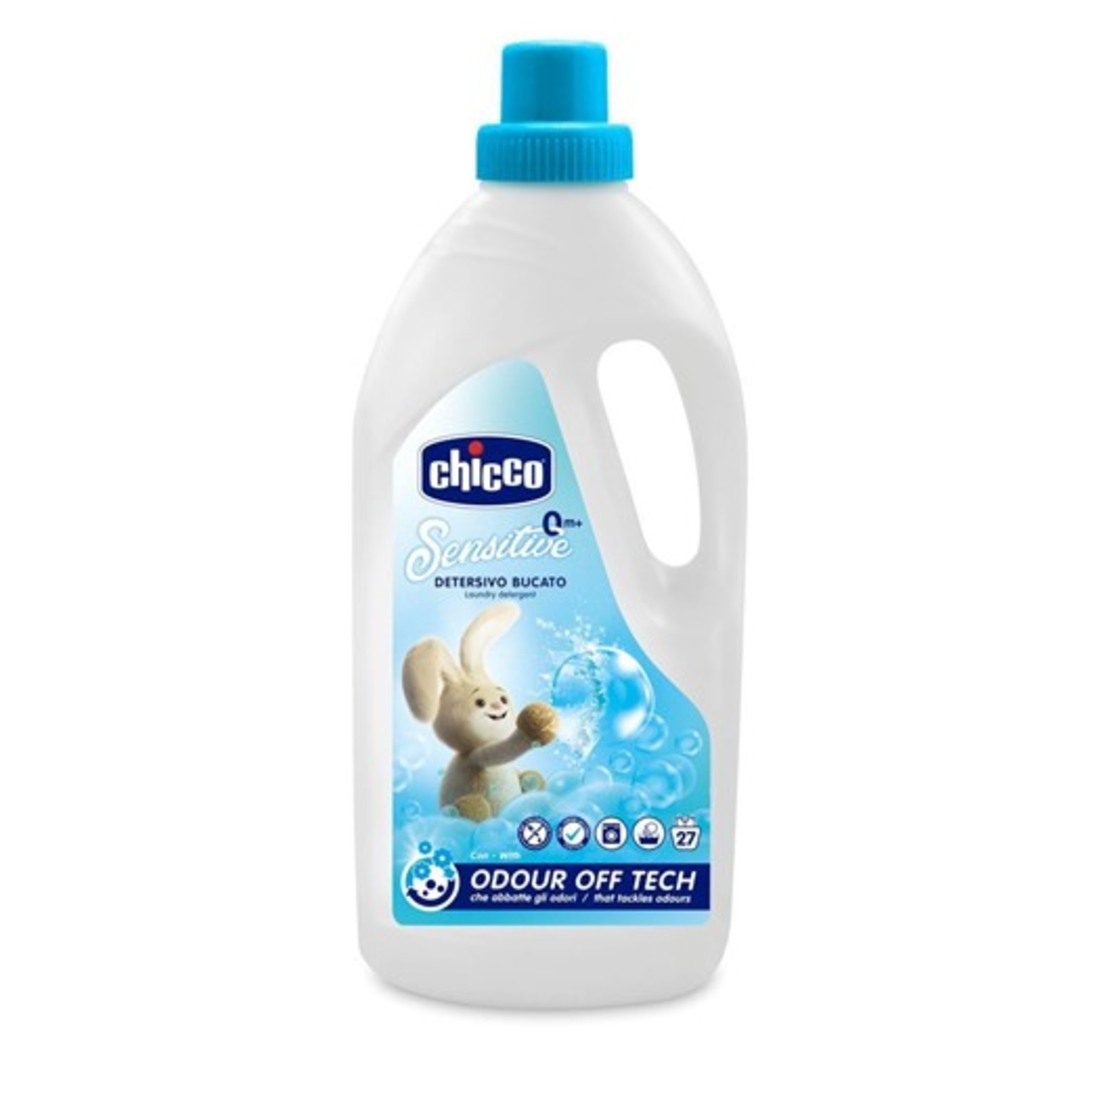 נוזל כביסה לתינוק 1.5 ליטר צ'יקו Laundry Detergent 1.5 Lit Cluster